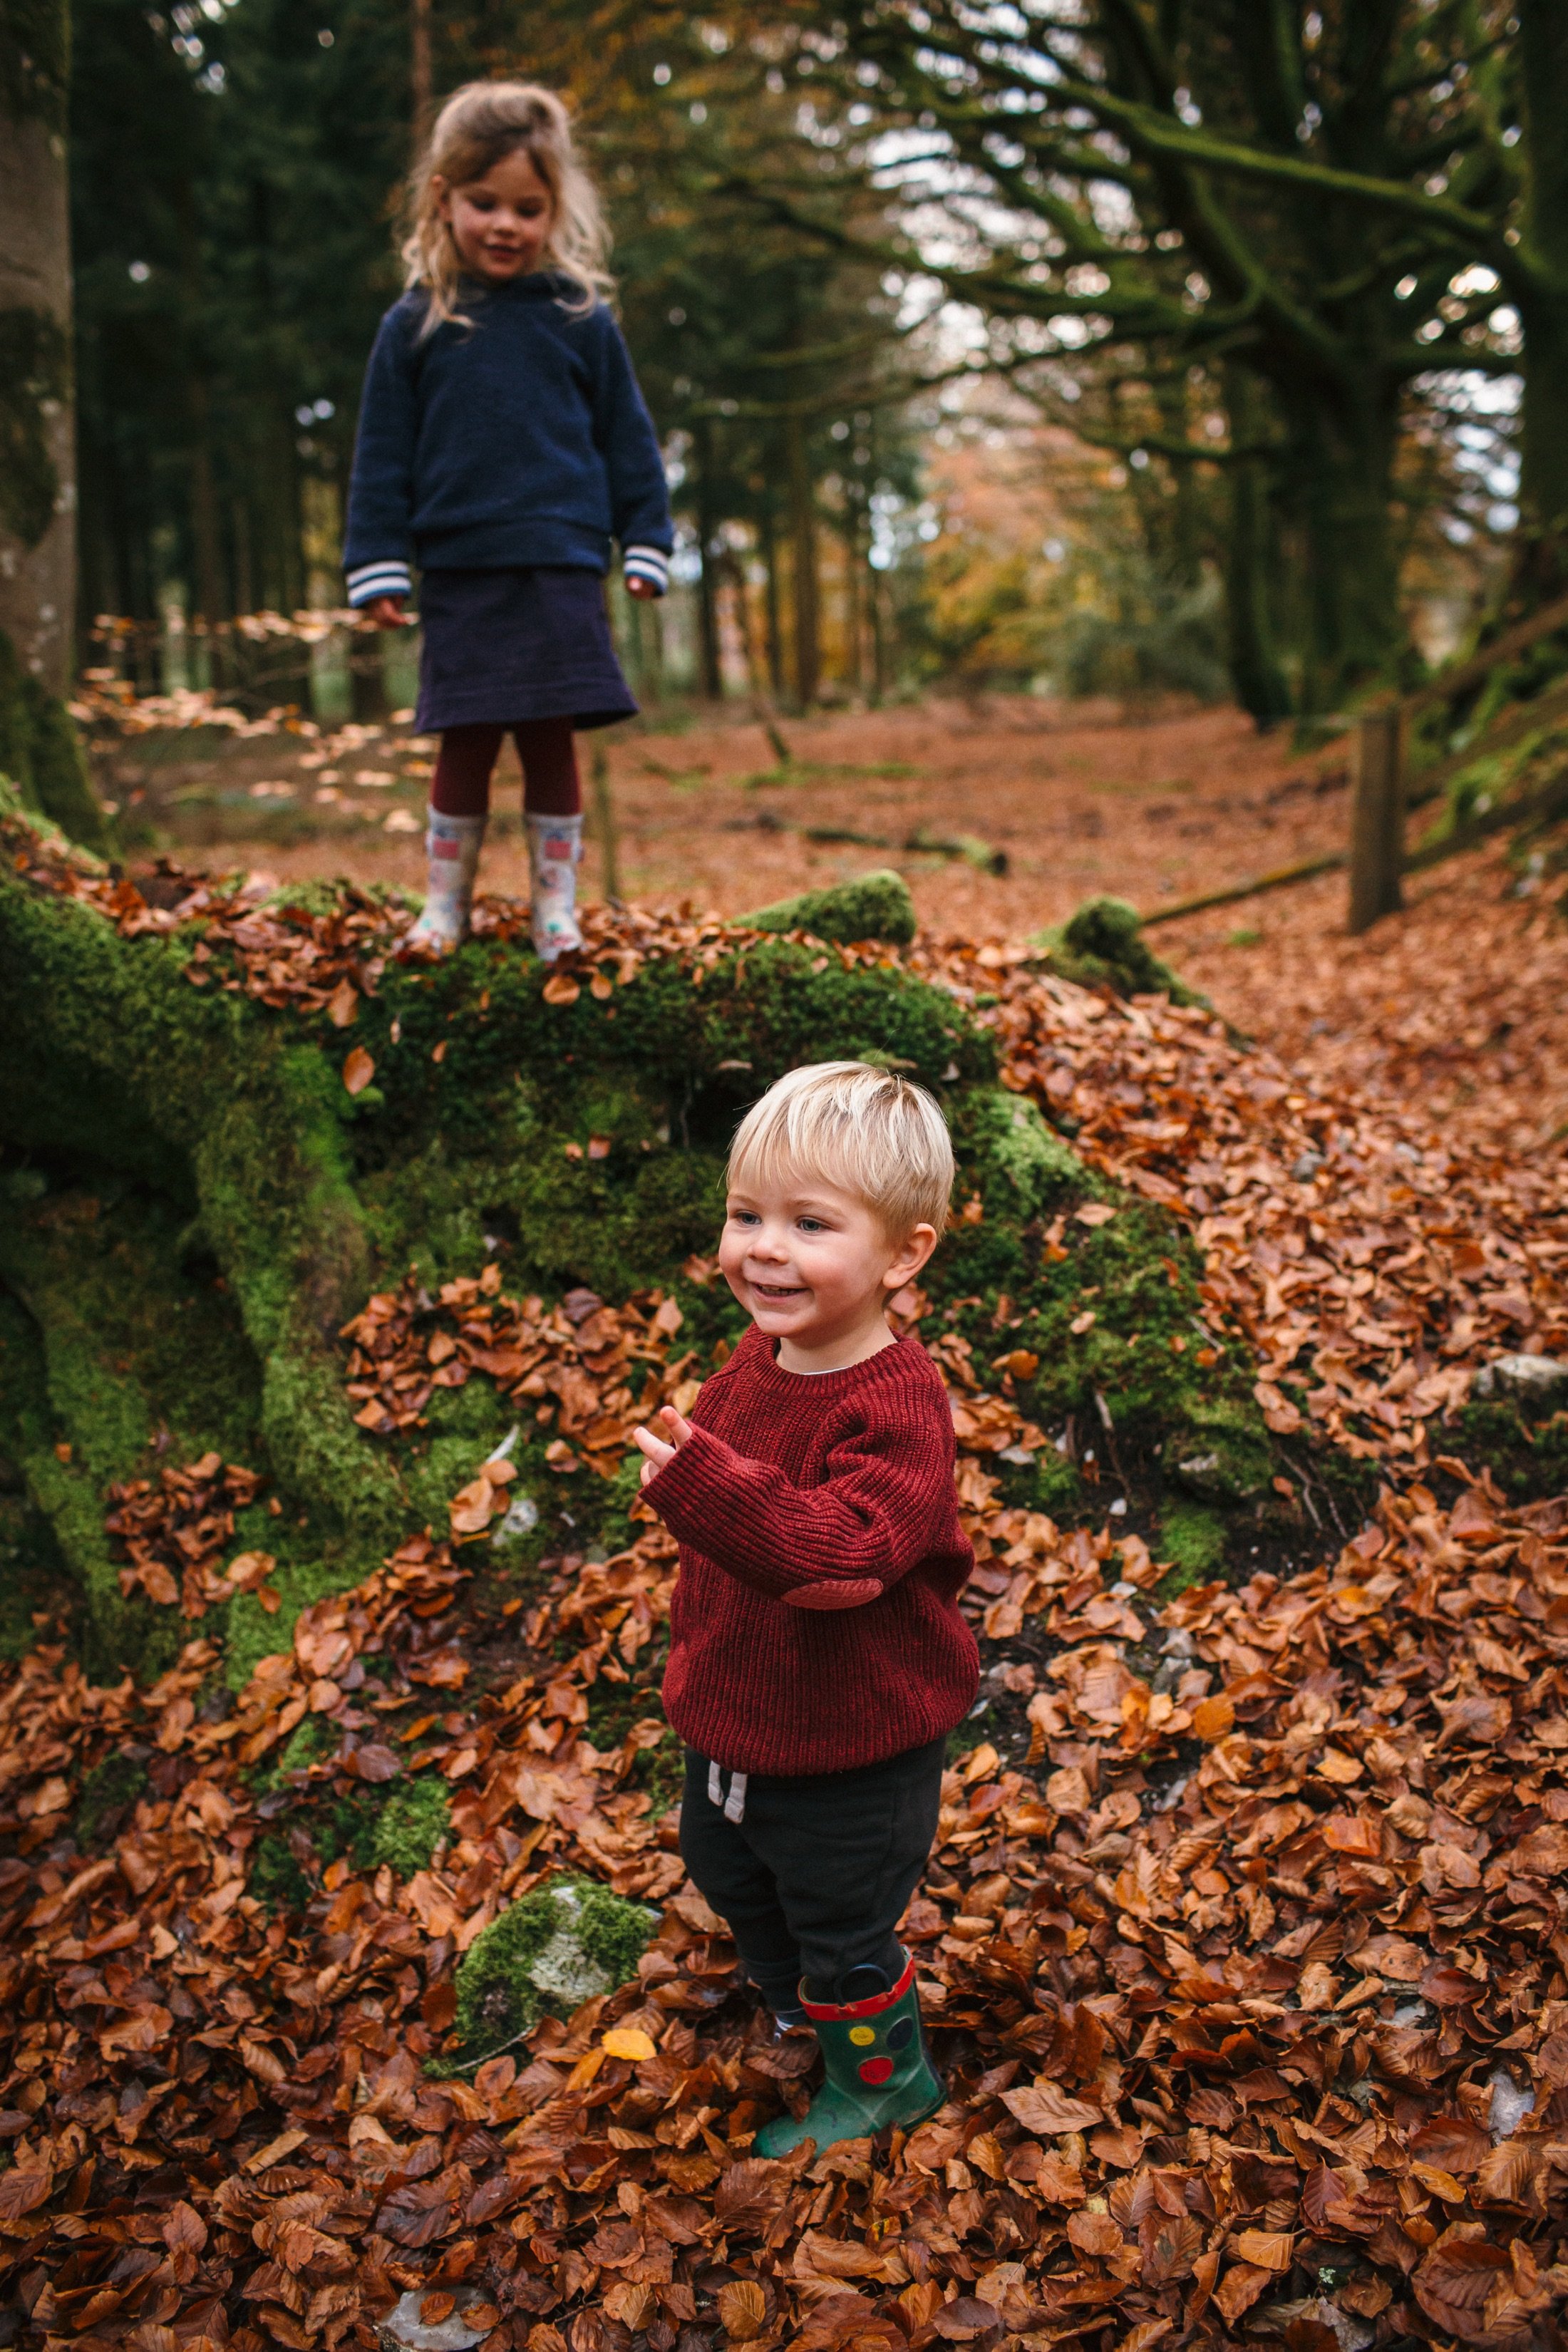 Family Photographer Devon & Cornwall_Autumn Natural Family Photoshoot_020.jpg